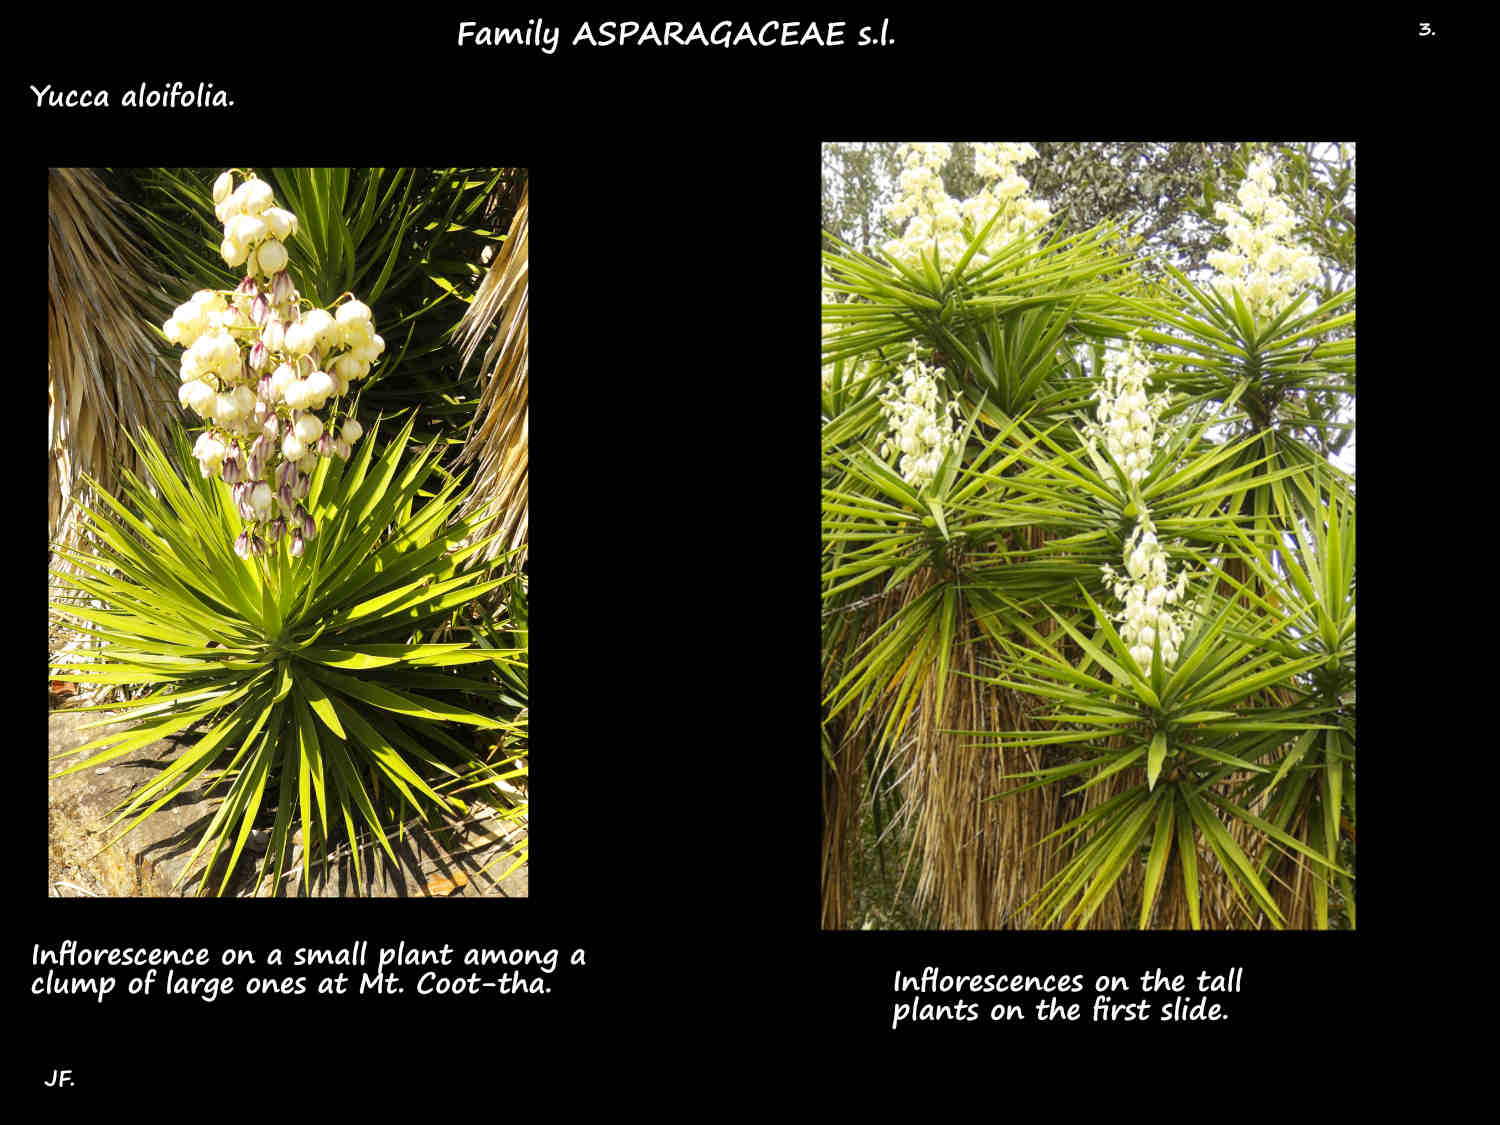 3 Yucca aloifolia inflorescences